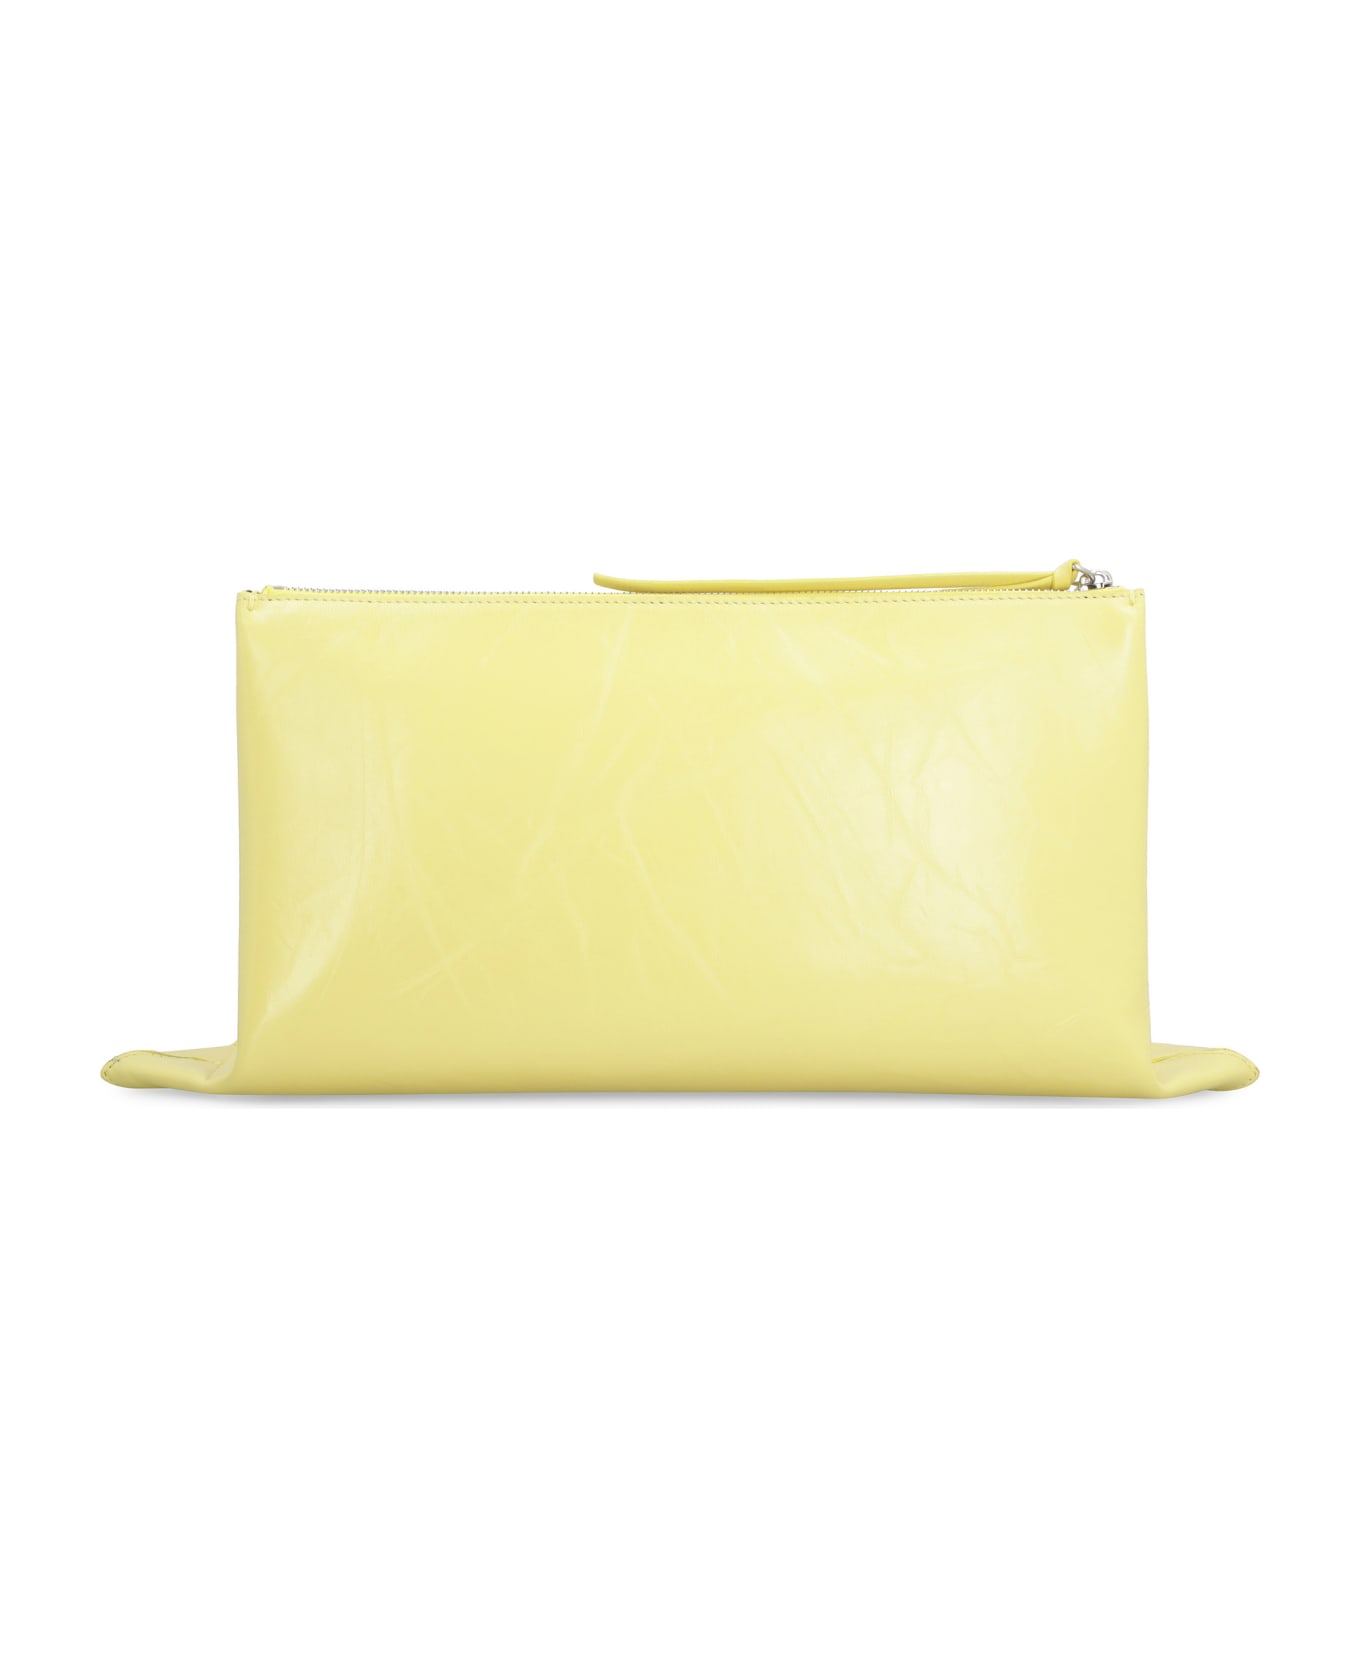 Jil Sander Leather Clutch - Yellow